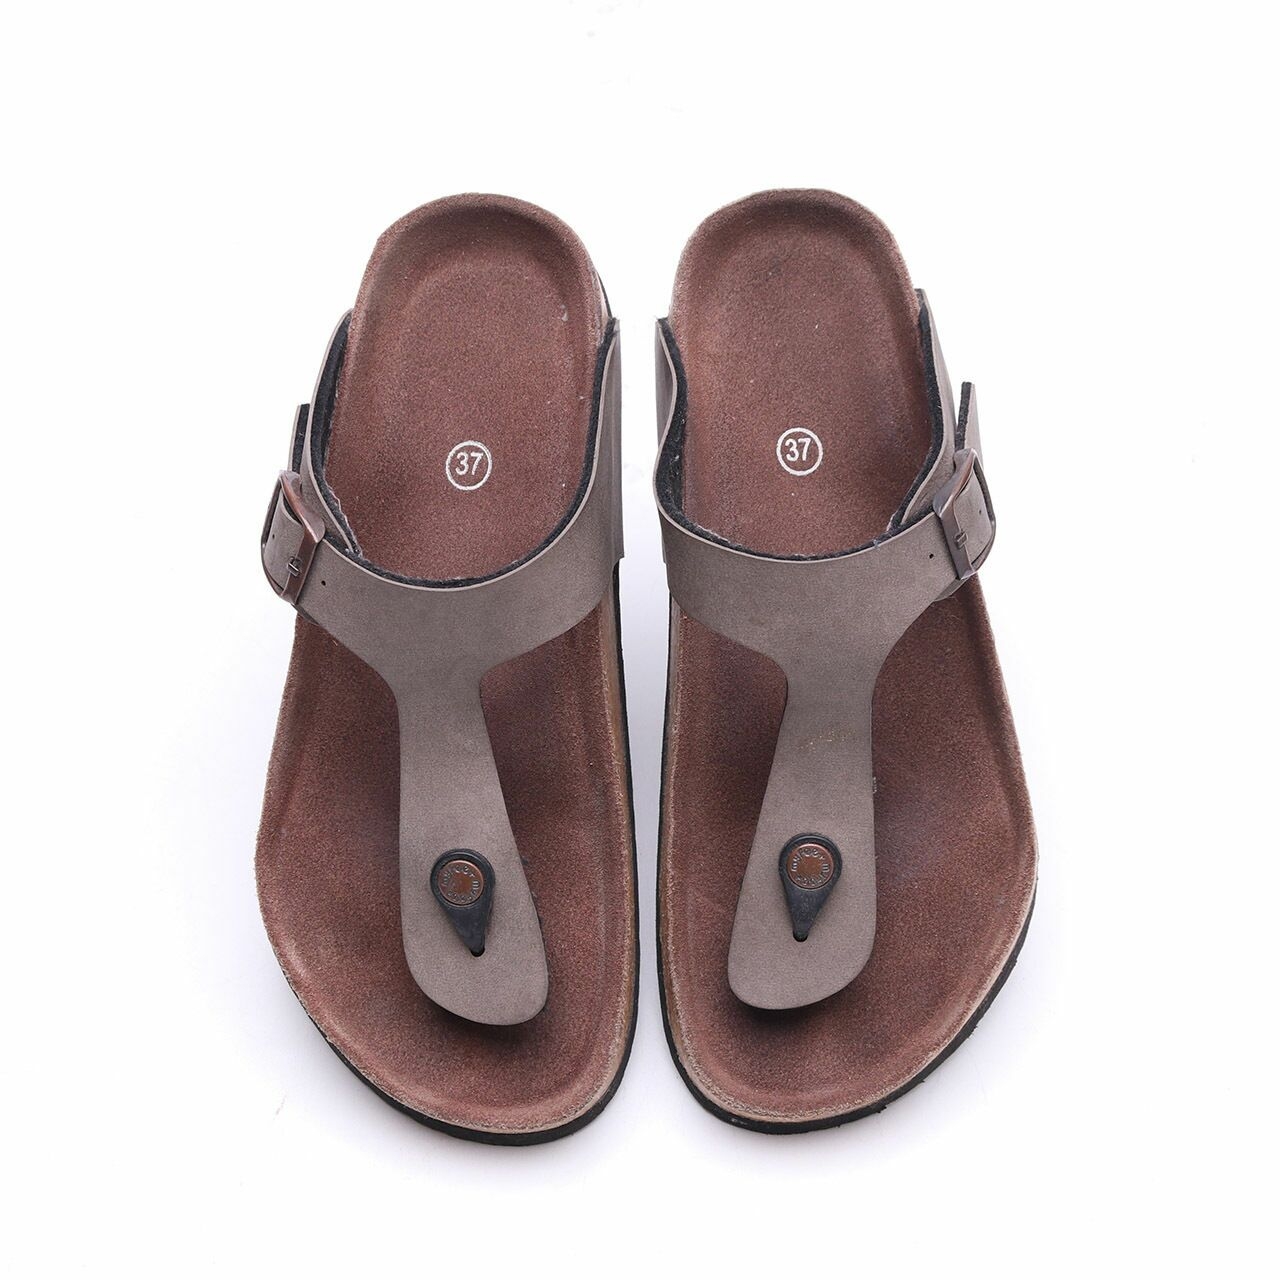 Myfeet Olive F1 Sandals